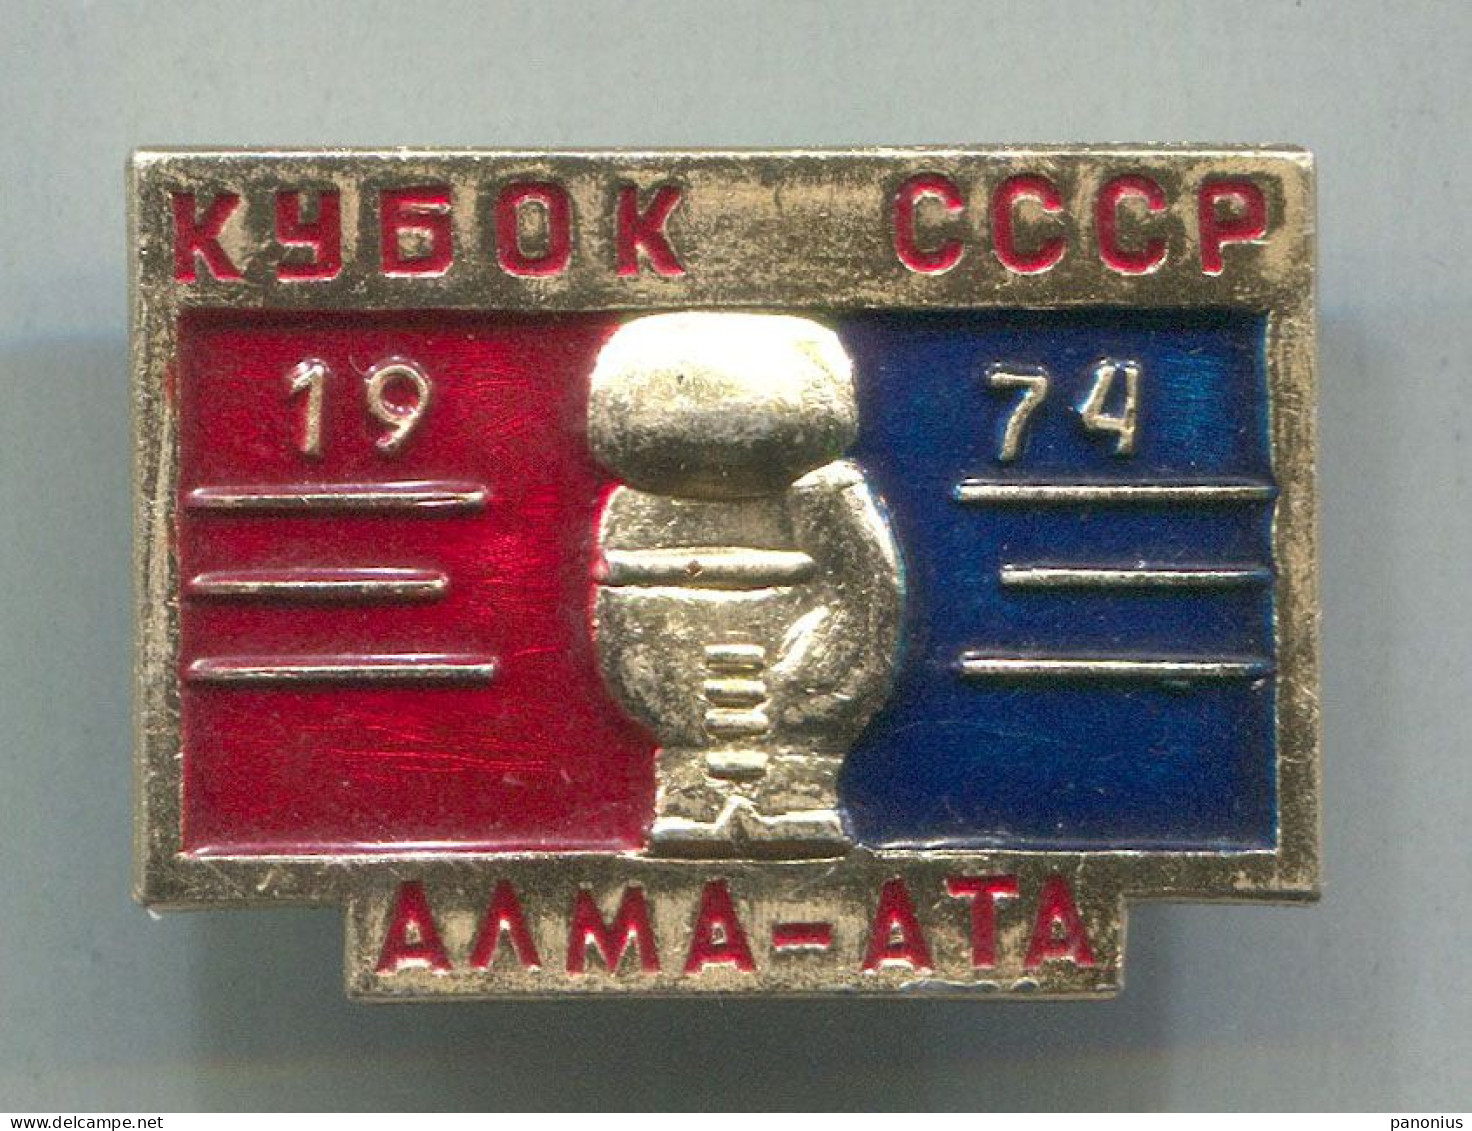 Boxing Box Boxen Pugilato - Alma - Ata Kazakhstan 1974. USSR Russia, Vintage  Pin  Badge  Abzeichen - Boxing